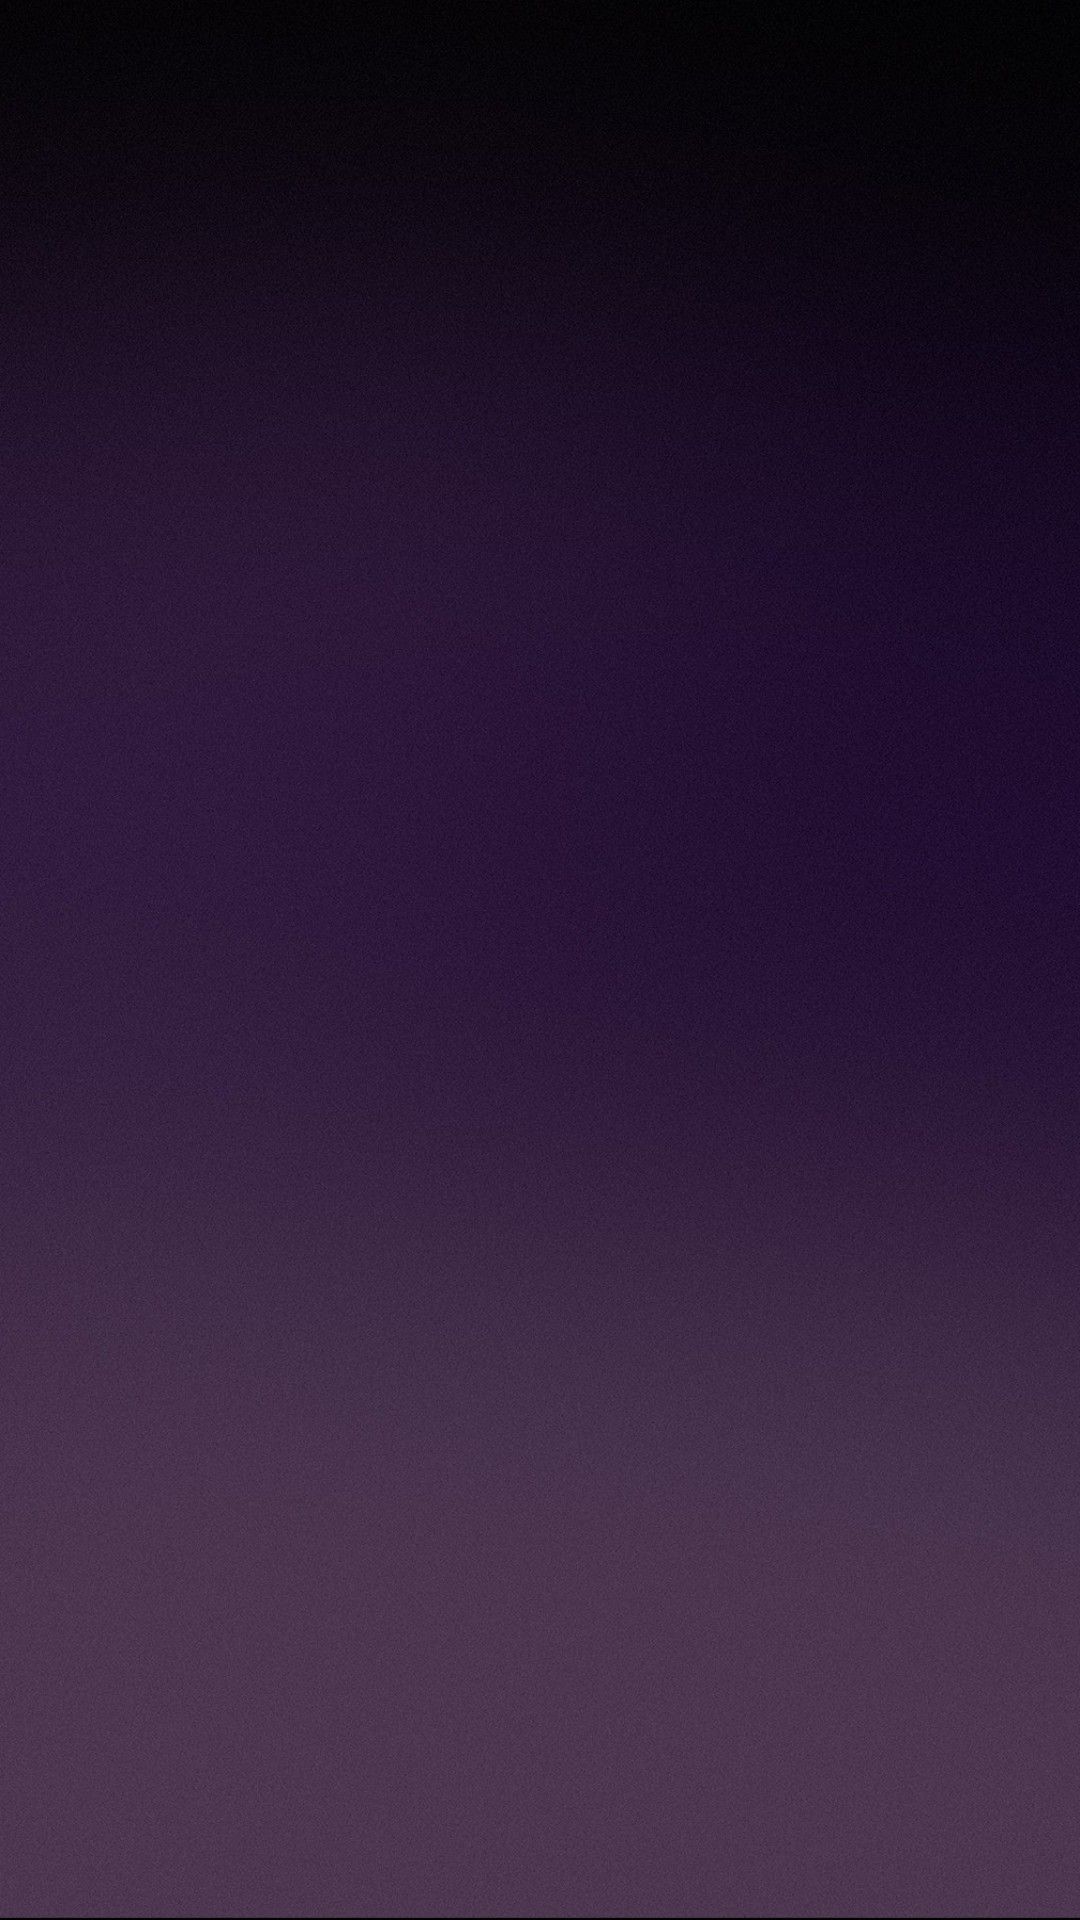 Purple Iphone 5S Wallpapers